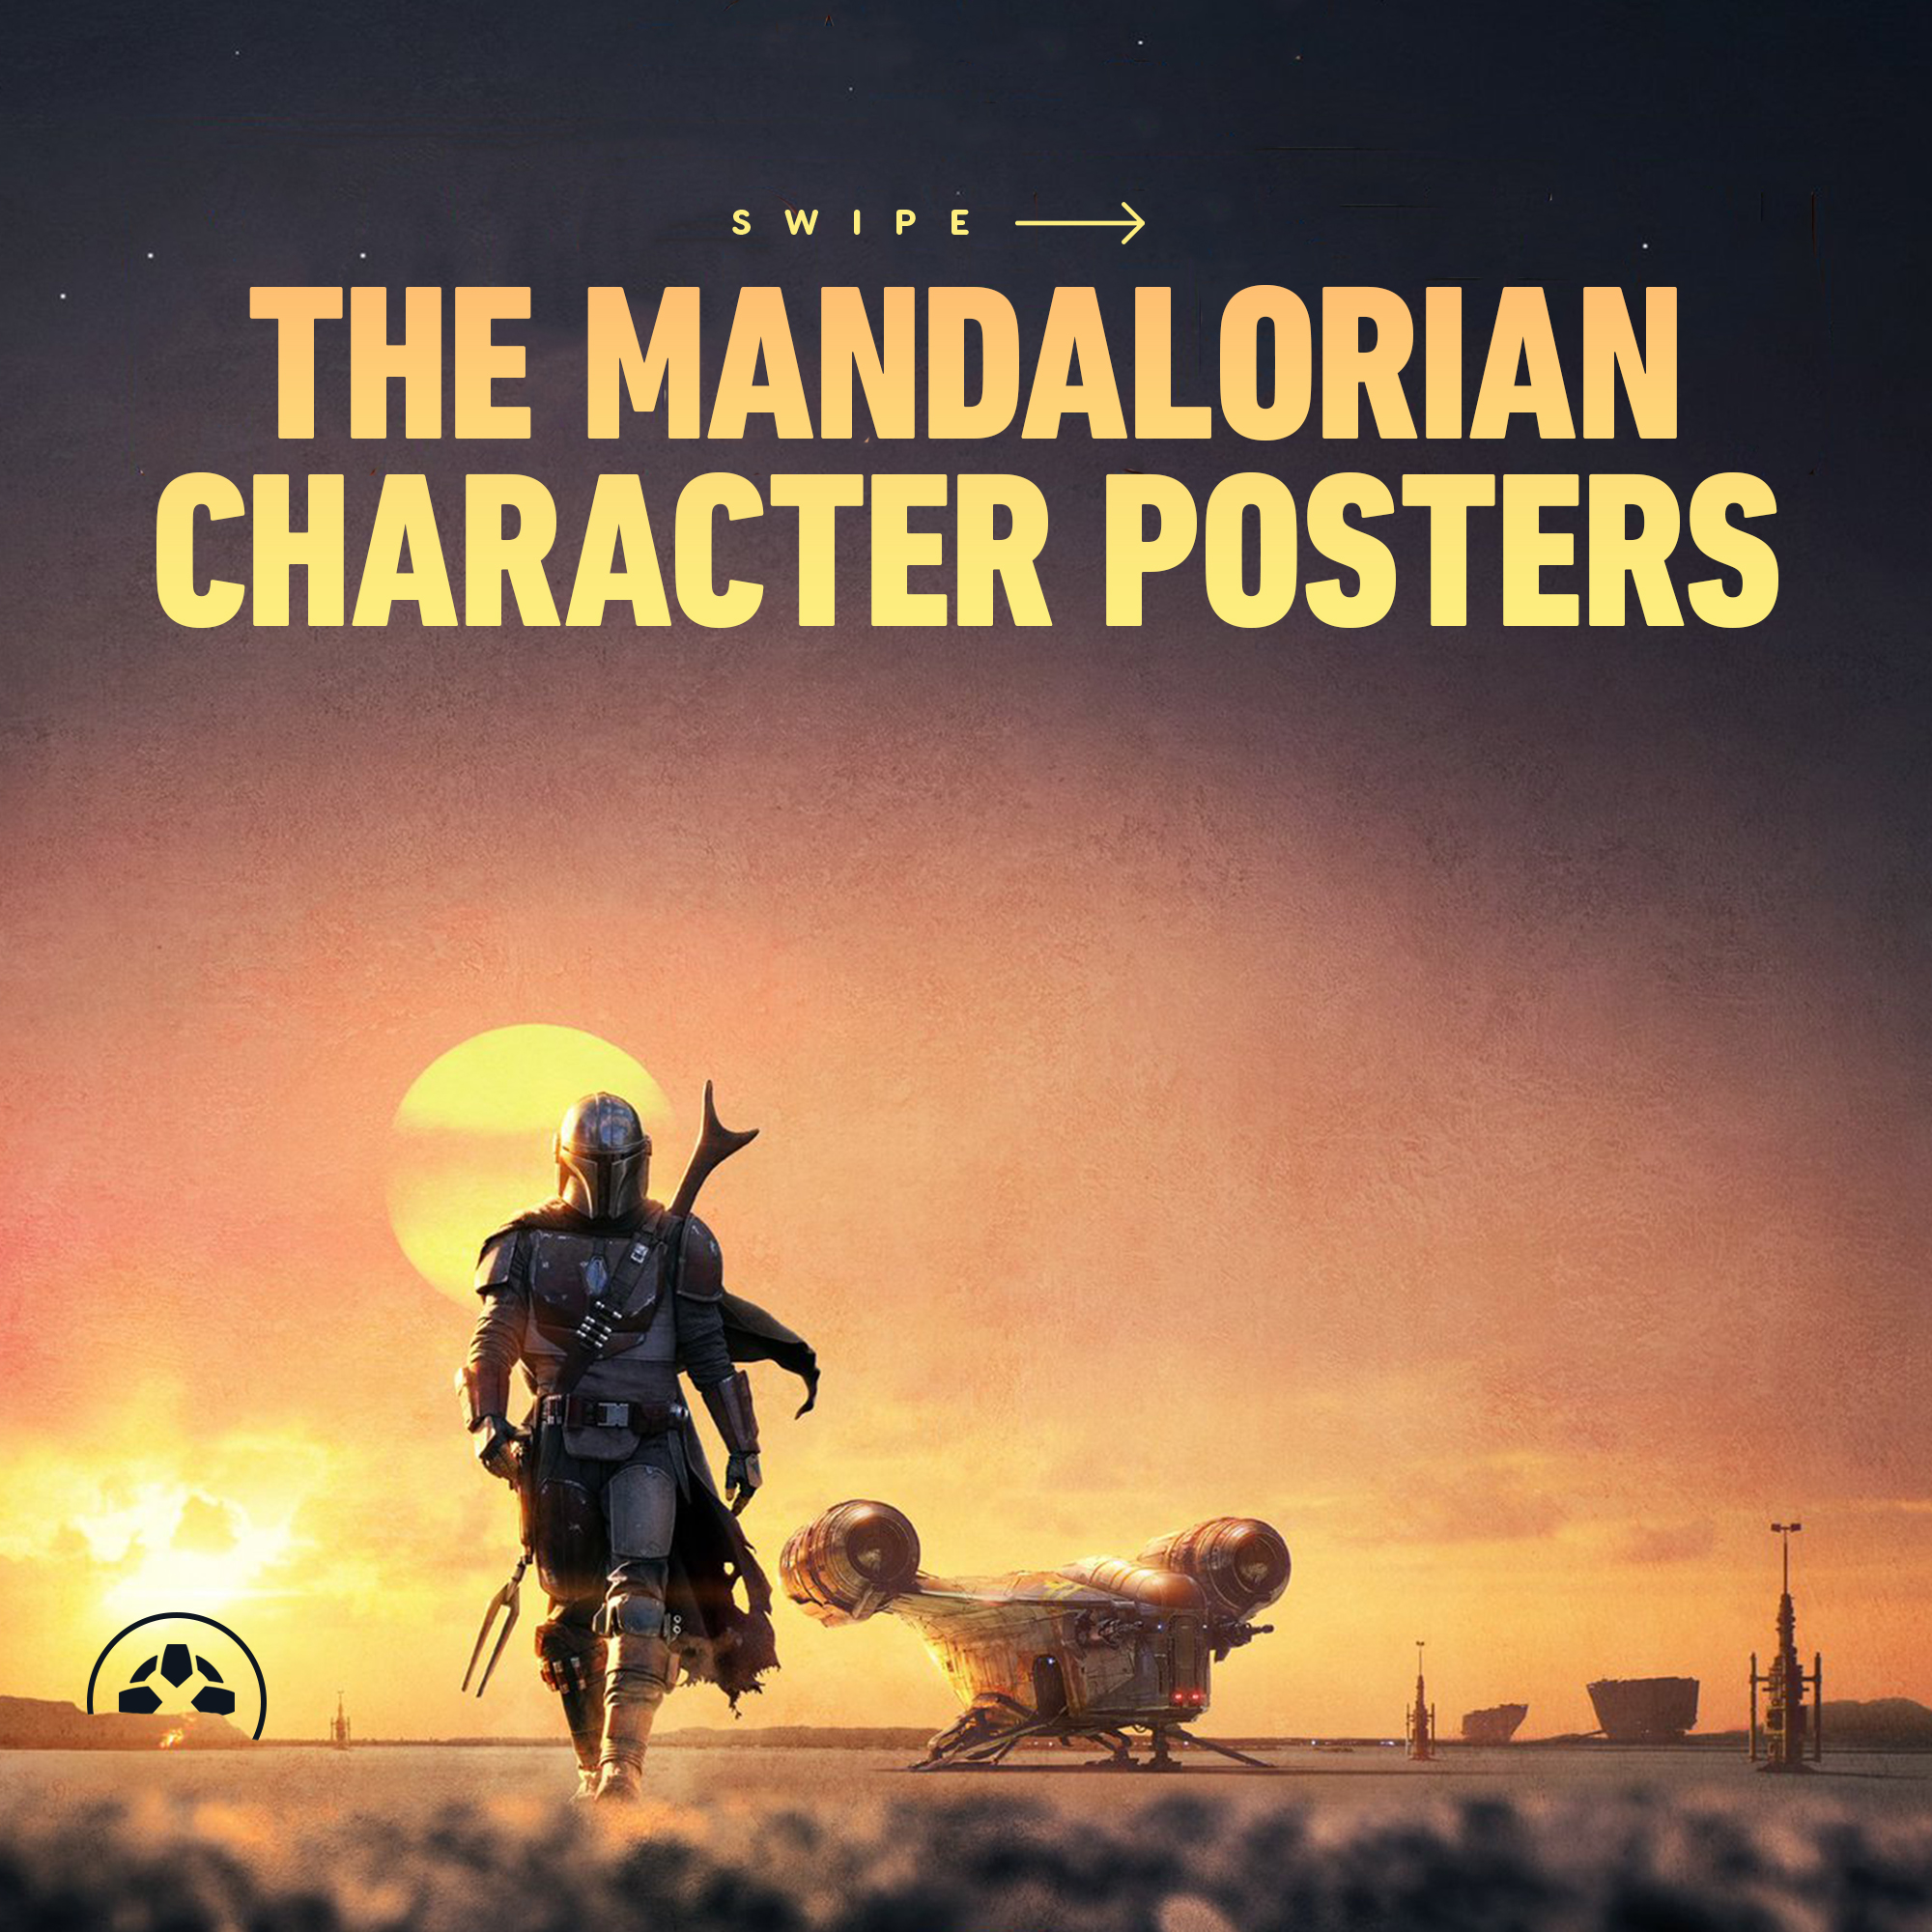 The Mandalorian Season 3 Poster: Din Djarin and Grogu Take Flight